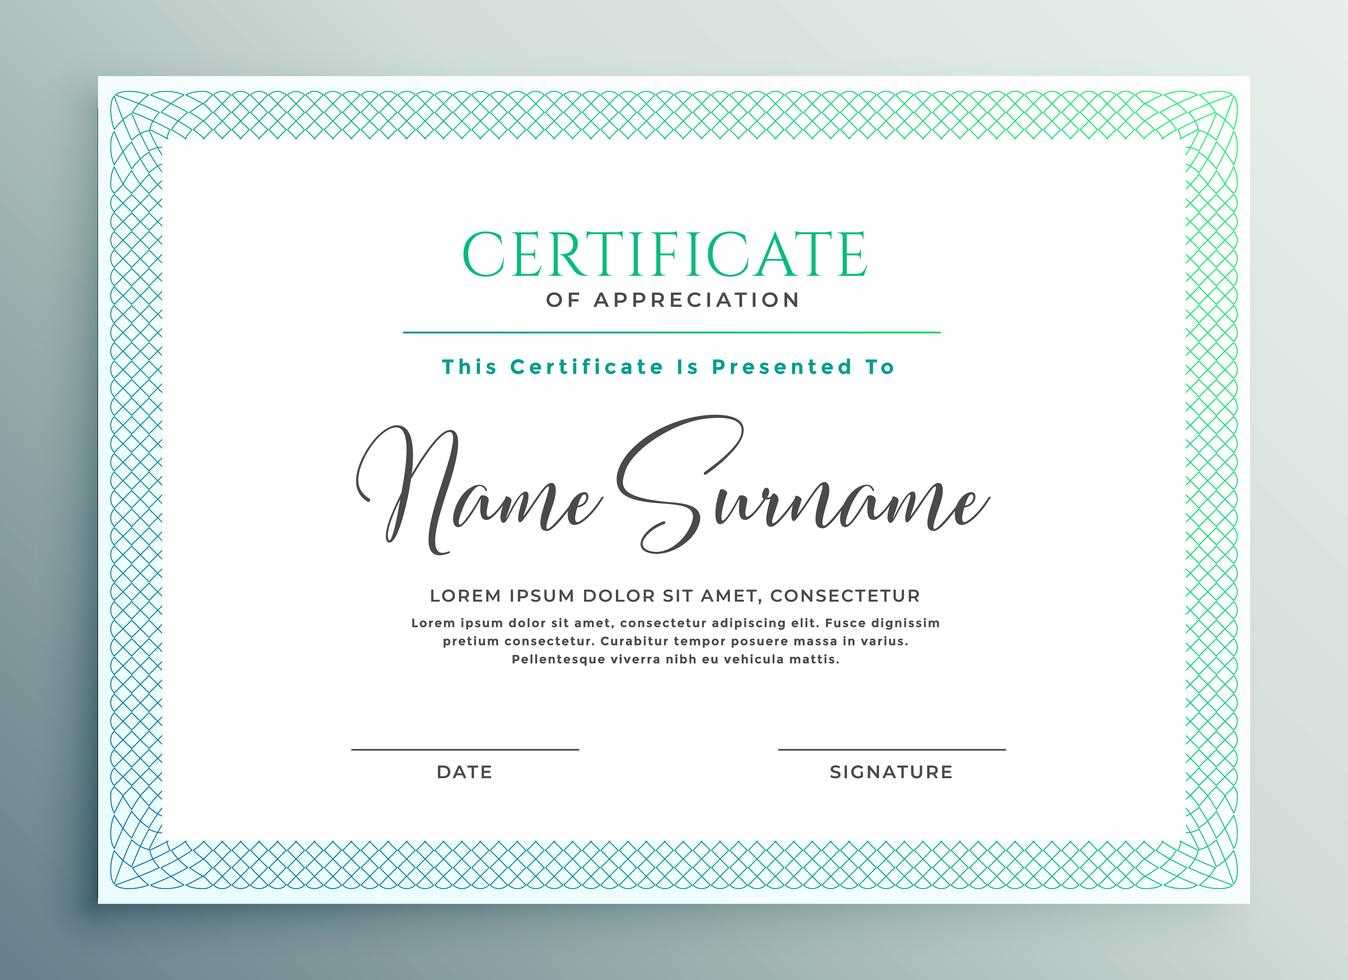 30+ Certificate Of Appreciation Download!! | Templates Study In Certificate Of Appreciation Template Doc